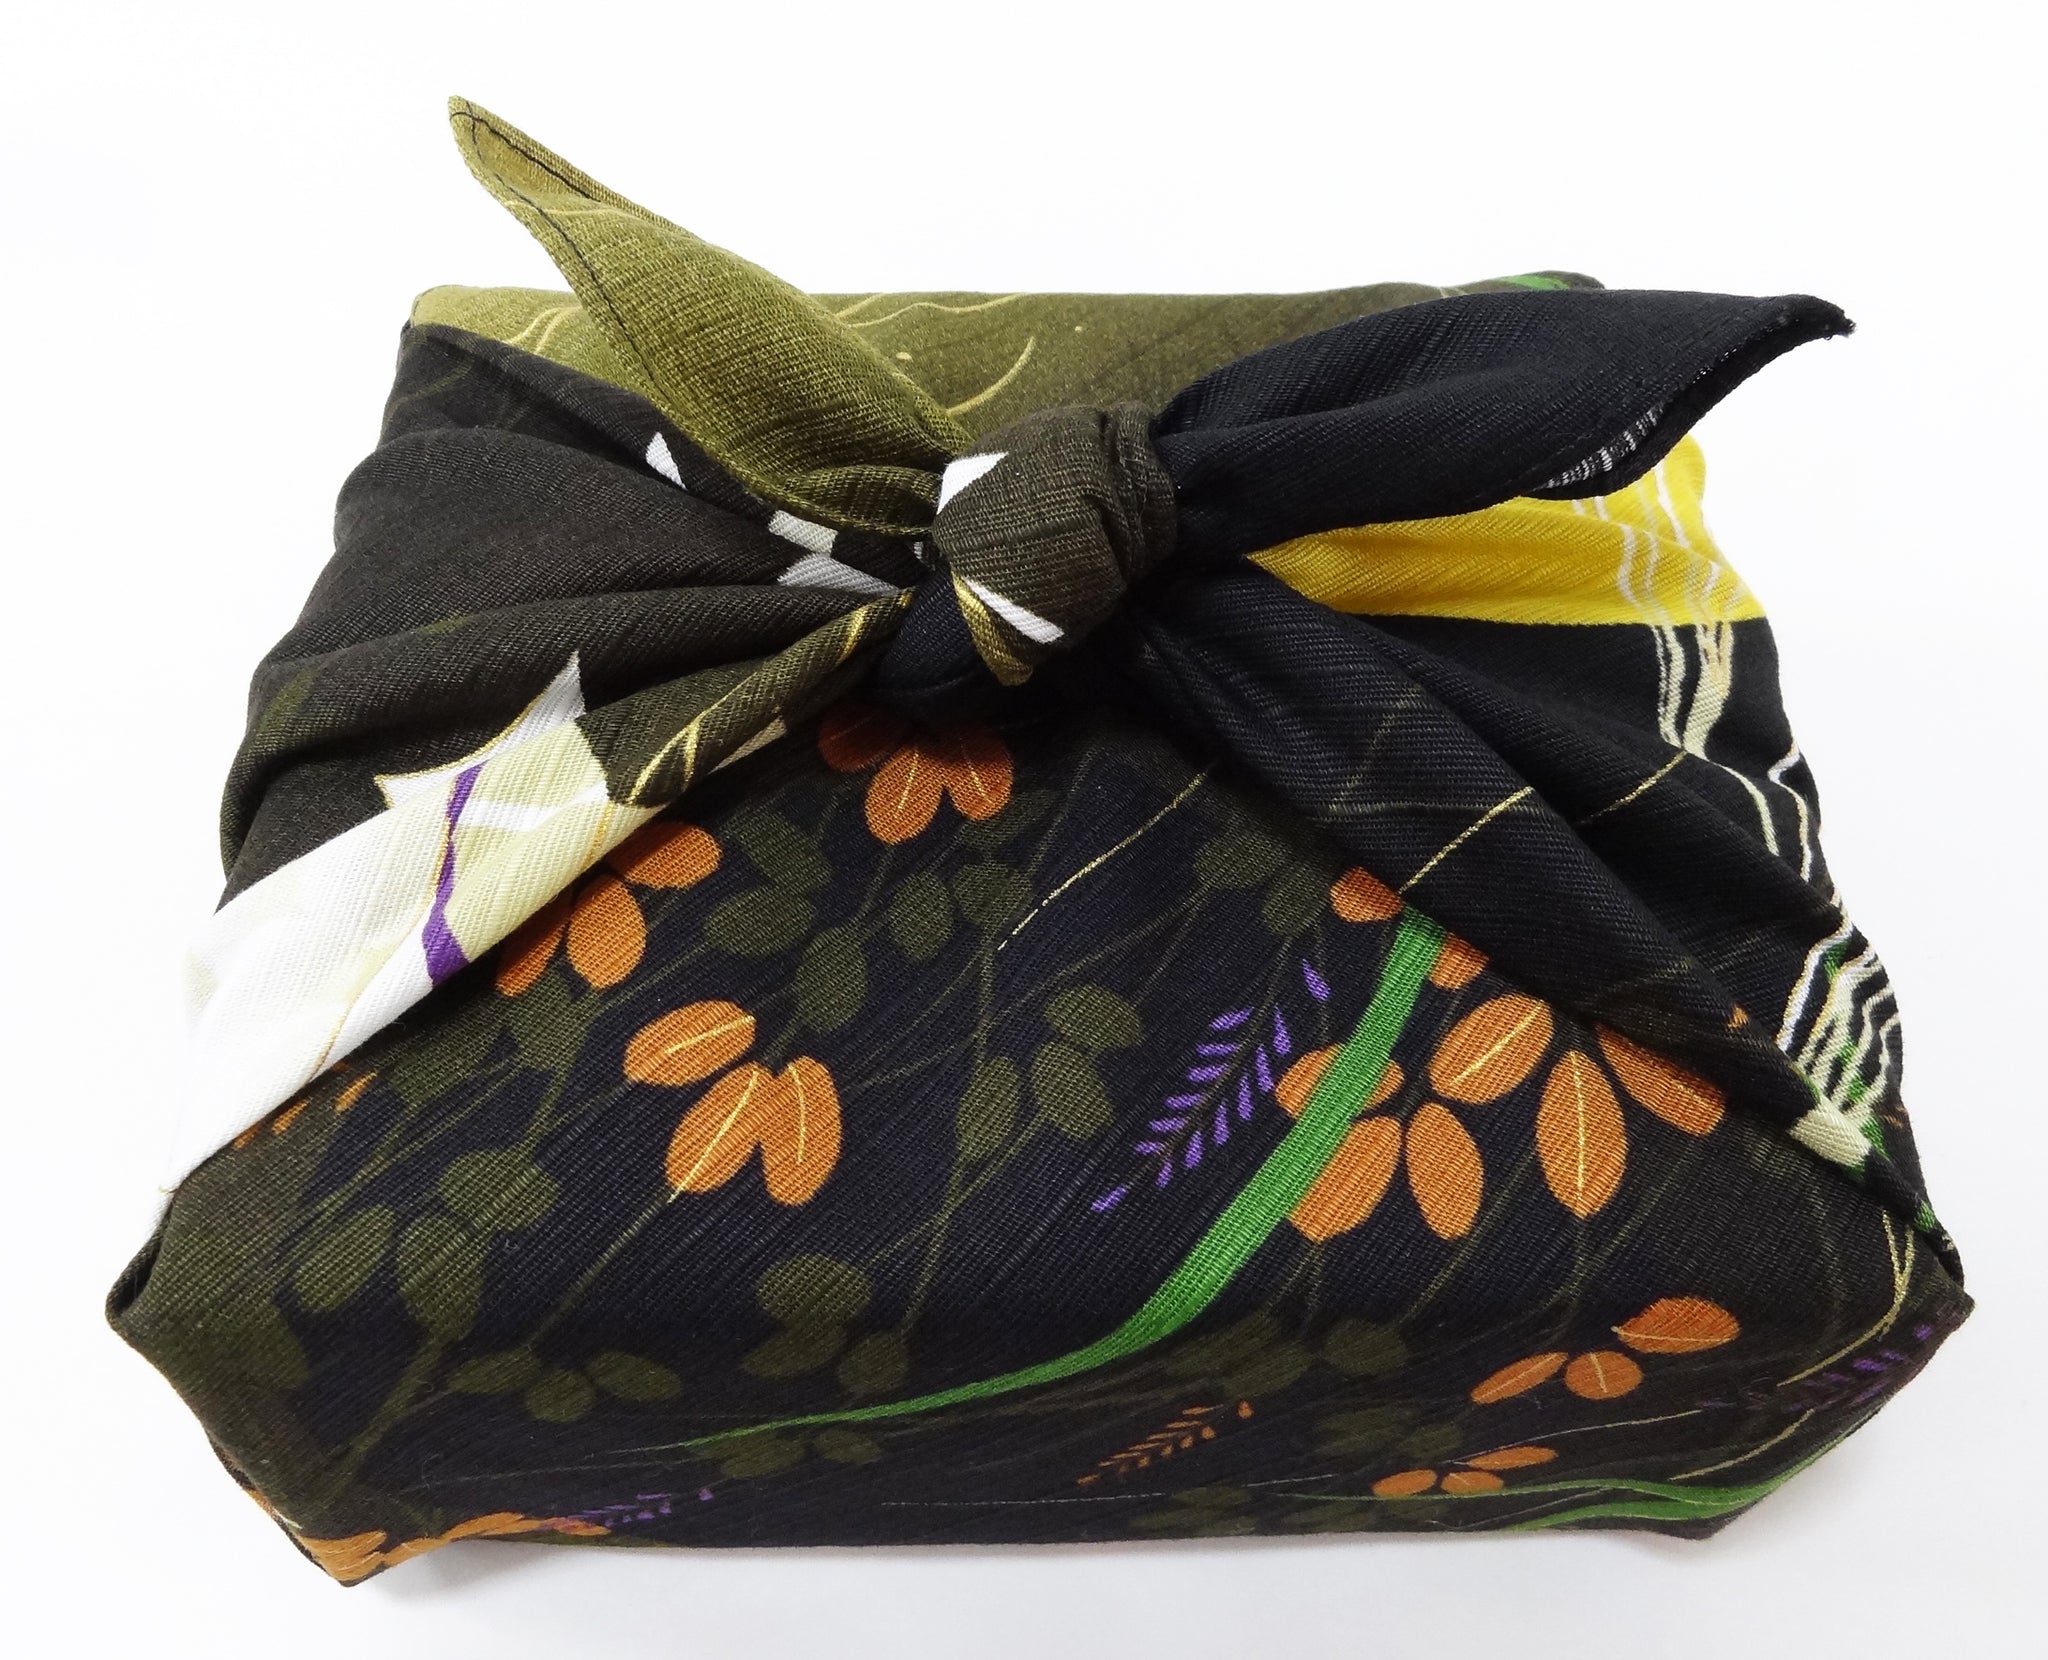 Blackwing Furoshiki (Japanese Cloth Wrapping Paper)